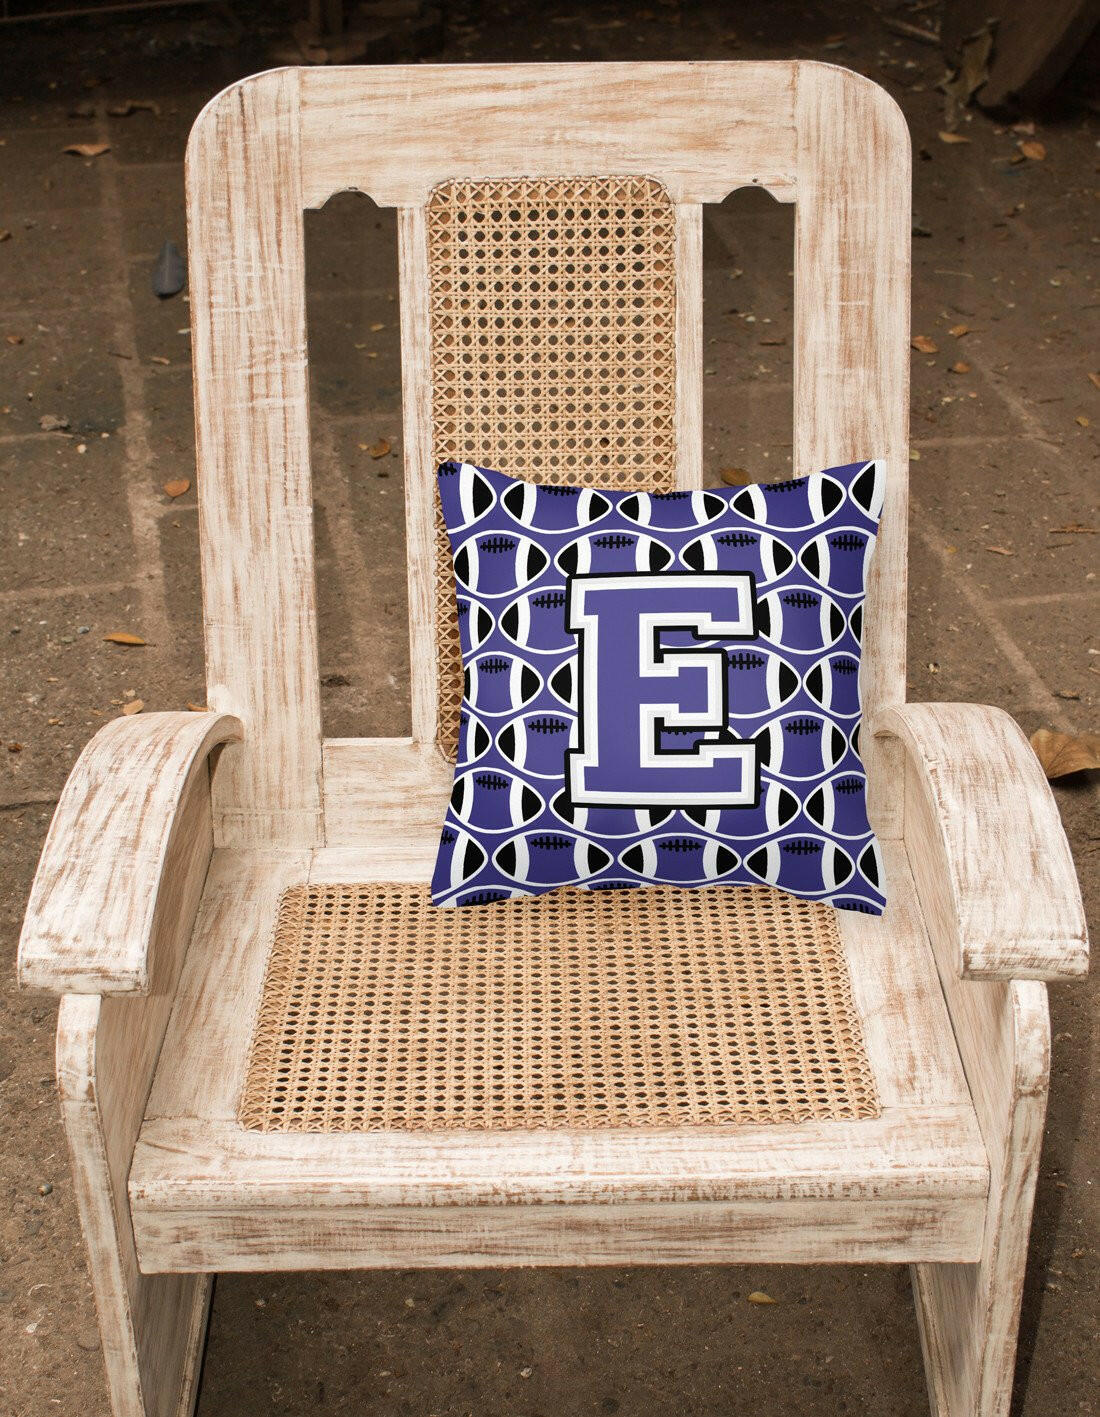 Letter E Football Purple and White Fabric Decorative Pillow CJ1068-EPW1414 by Caroline's Treasures